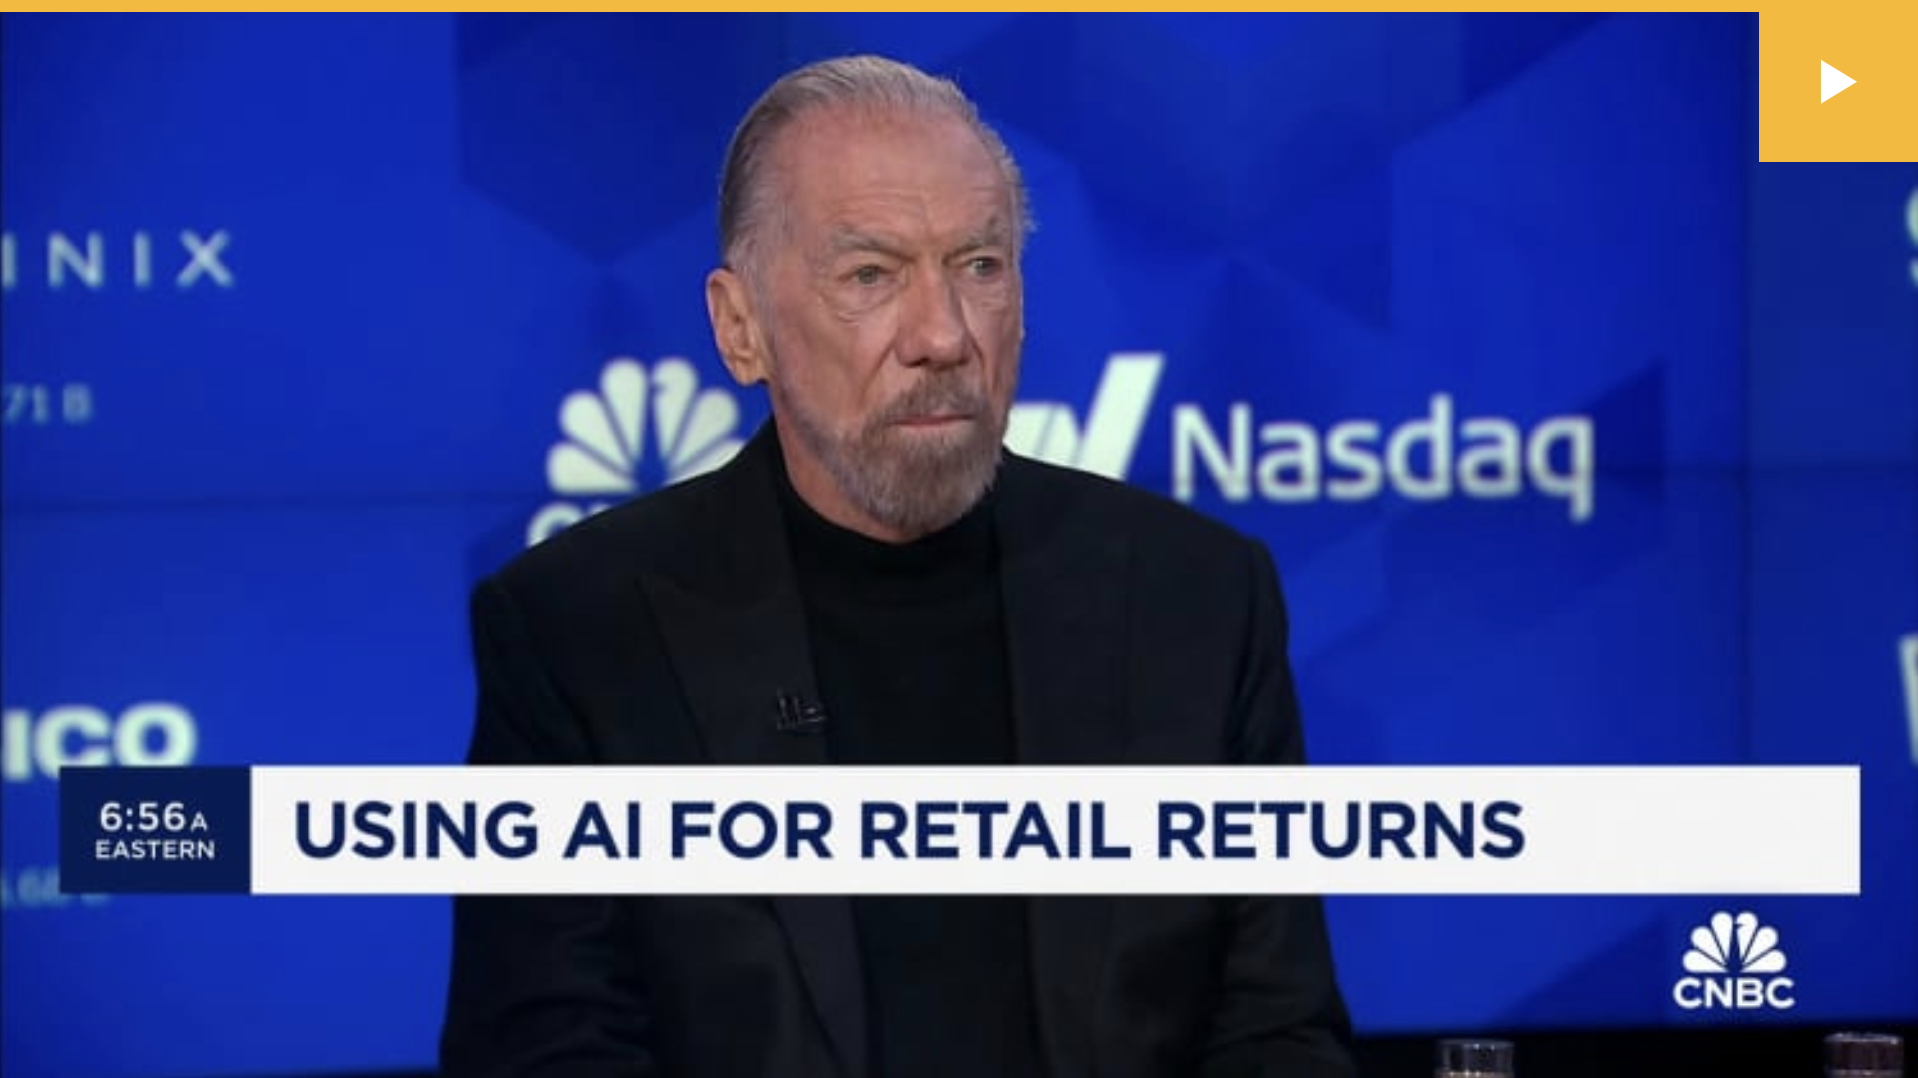 John Paul DeJoria on Using AI for retail returns